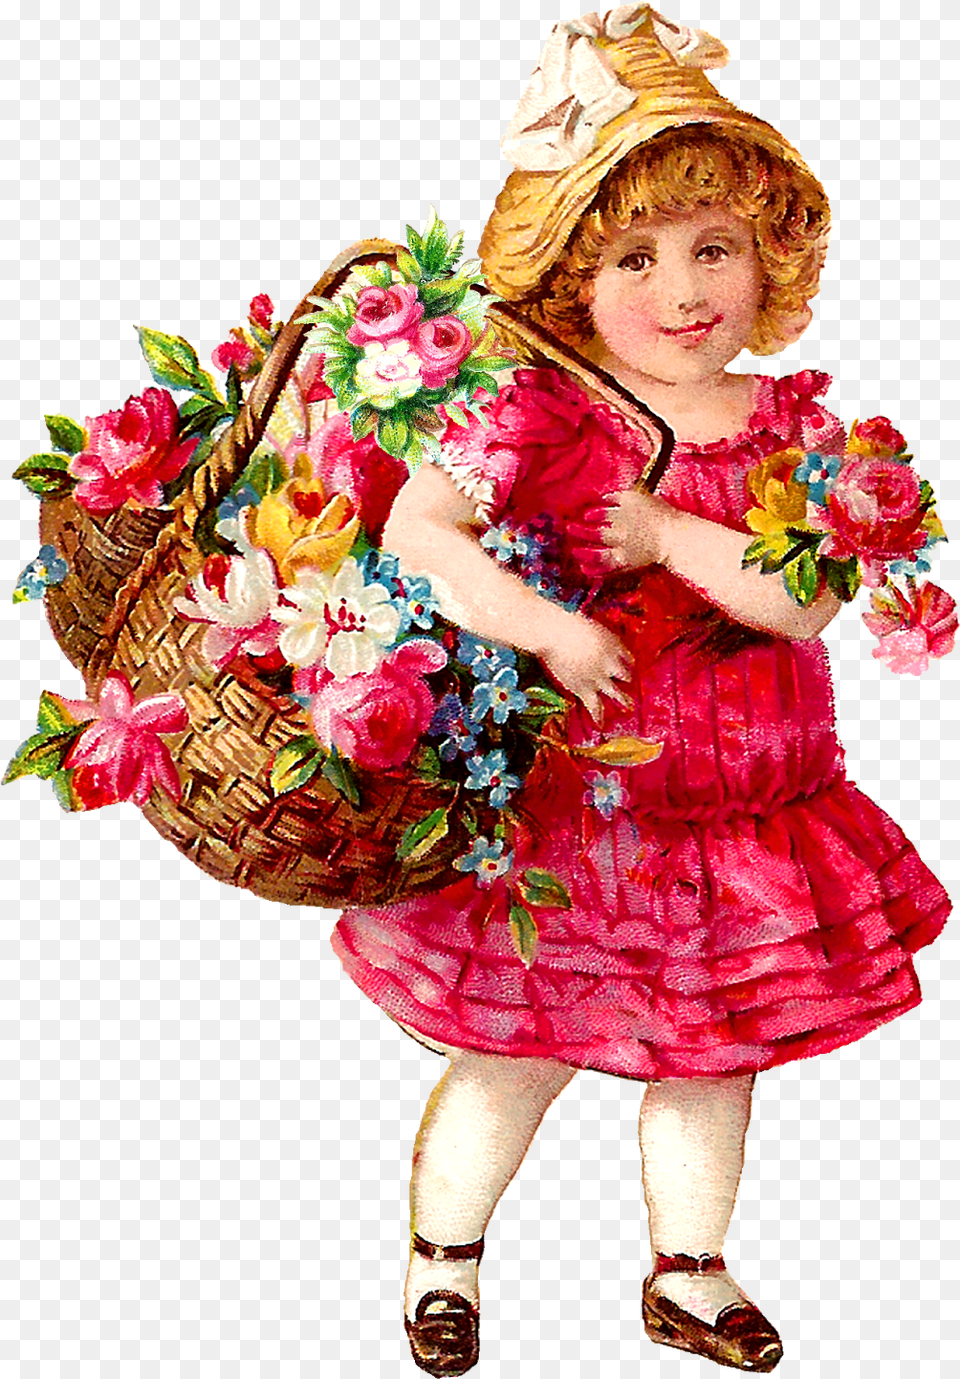 Flower Girl Download, Flower Bouquet, Flower Arrangement, Hat, Clothing Png Image